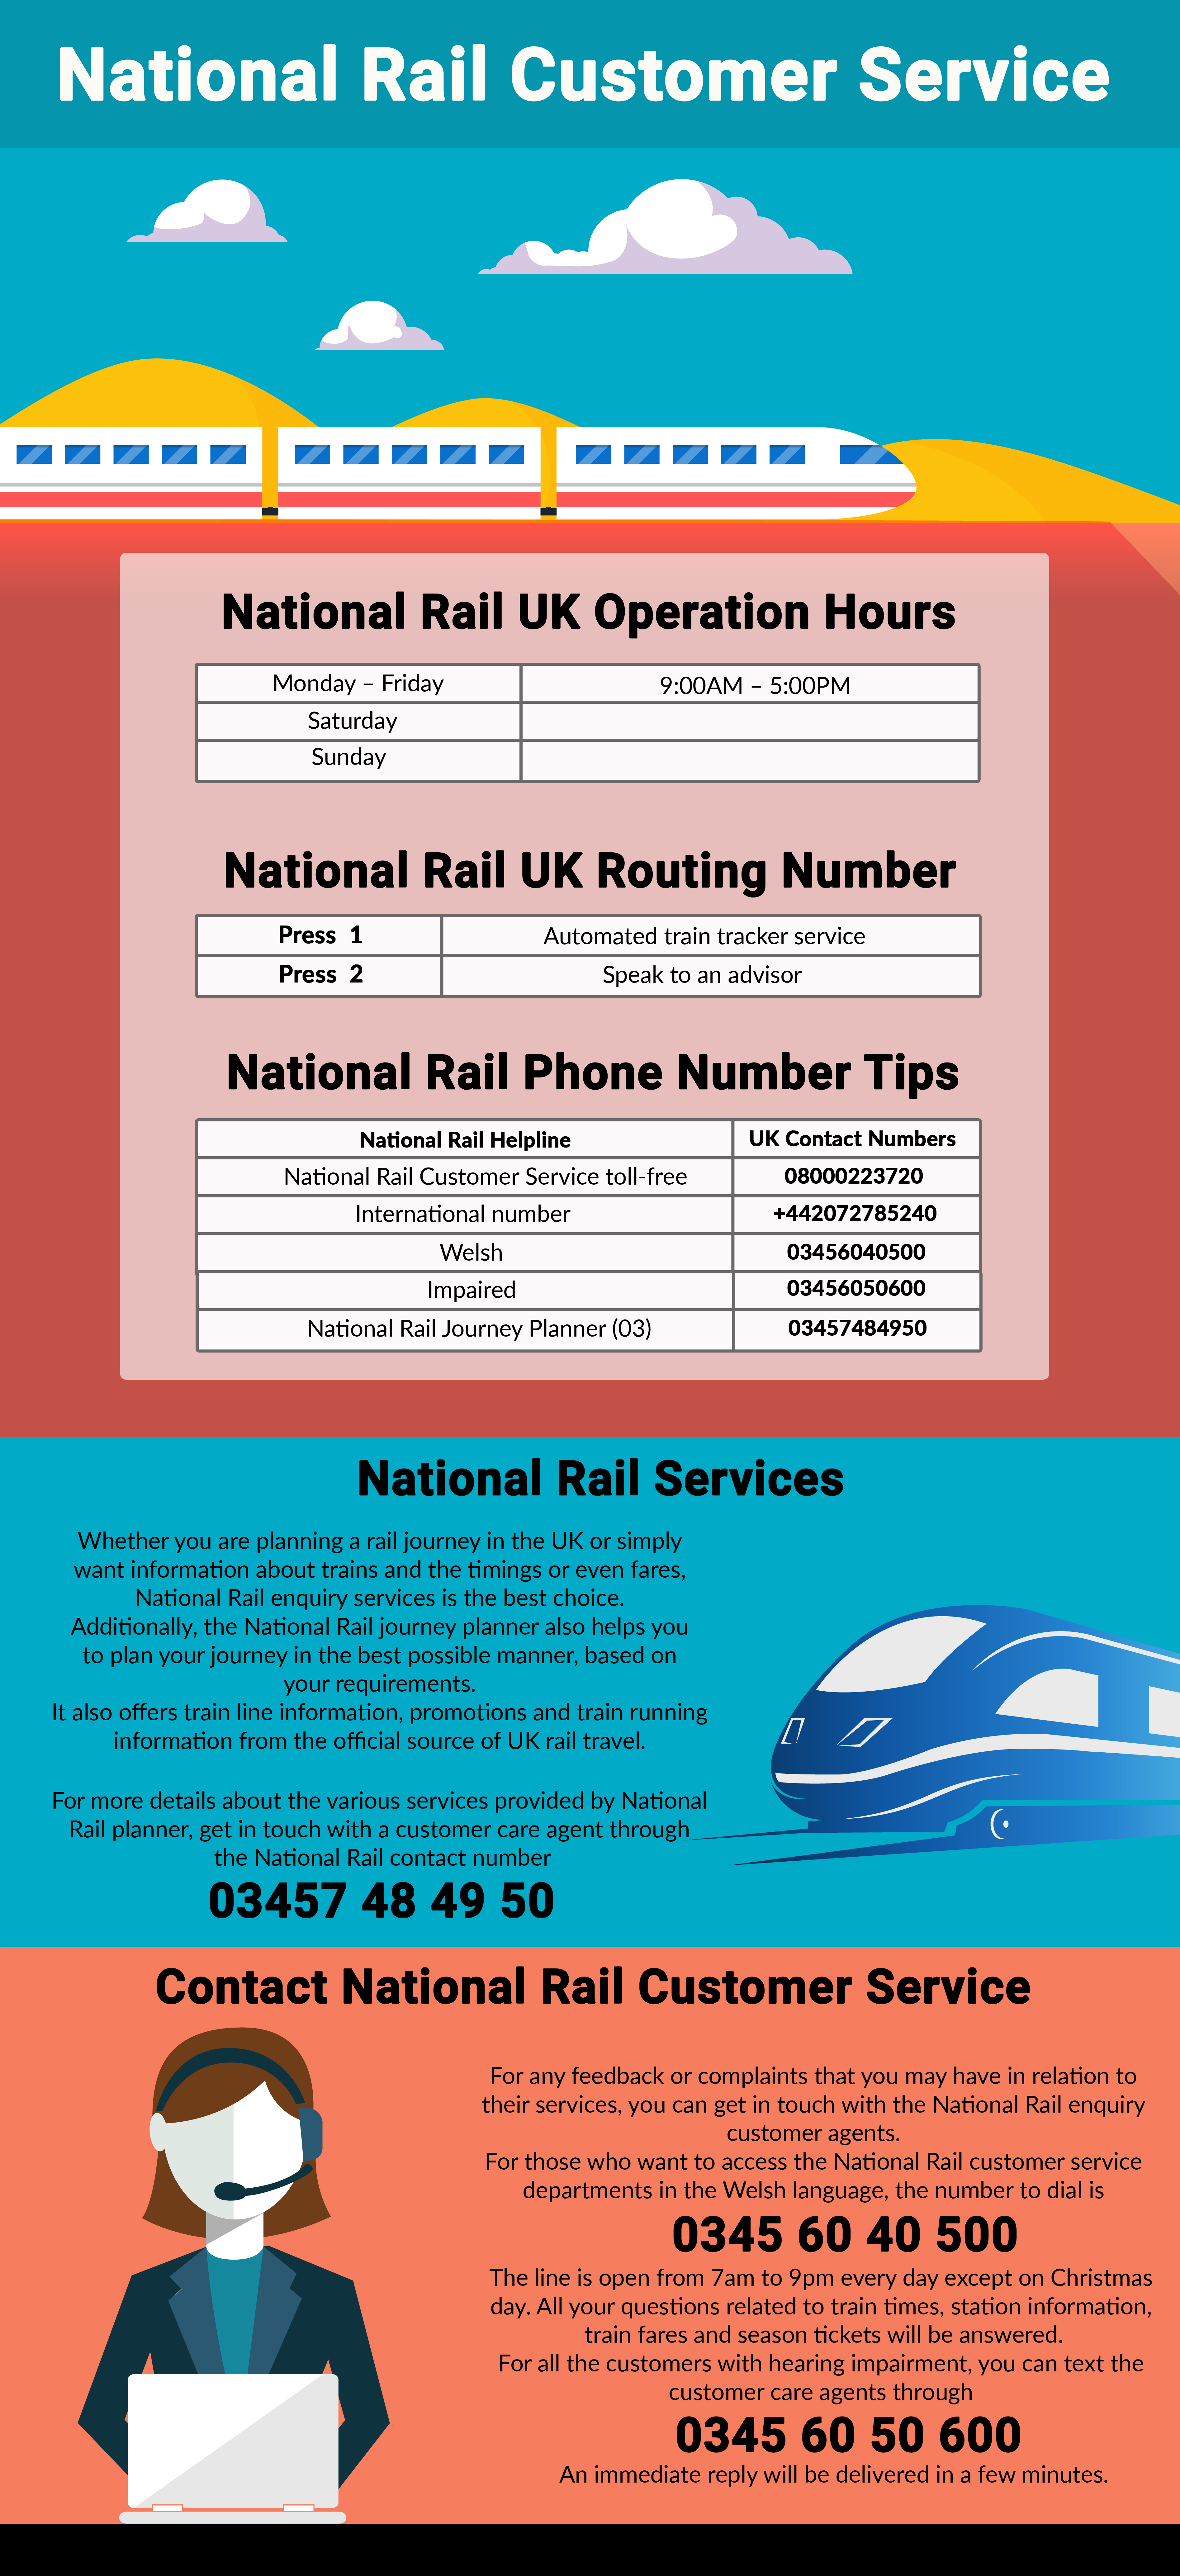 National Rail Helpline